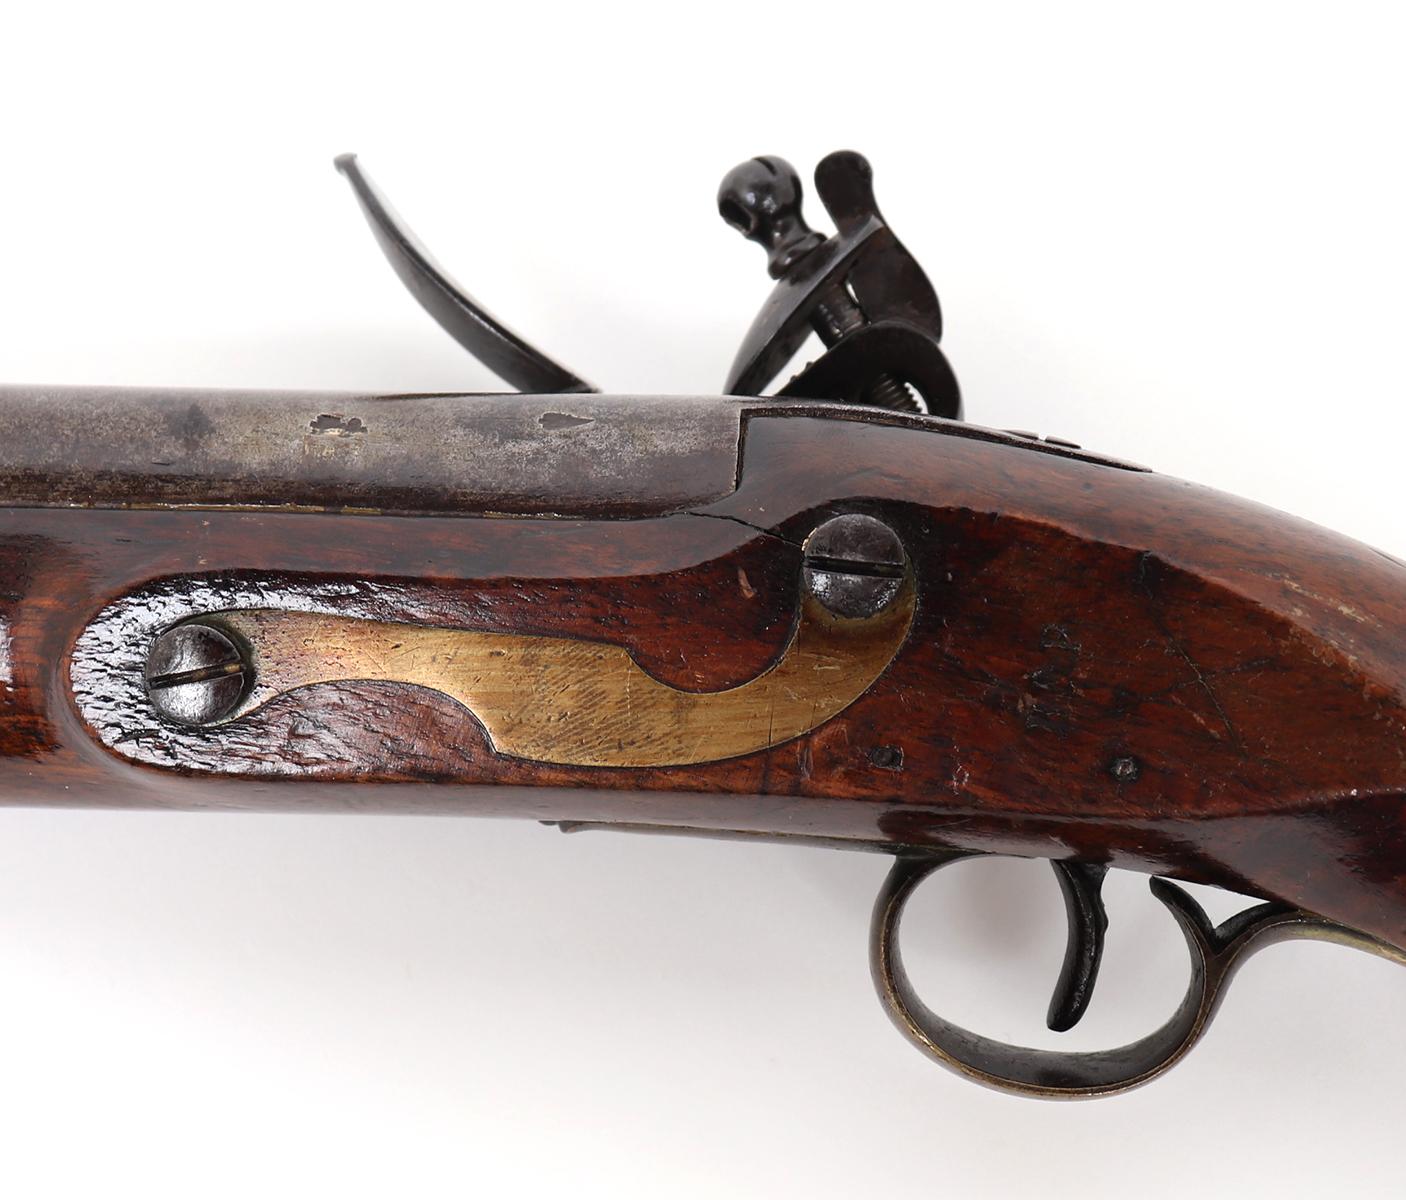 Contract British Light Dragoon Flintlock Pistol, By Brander & Potts, London